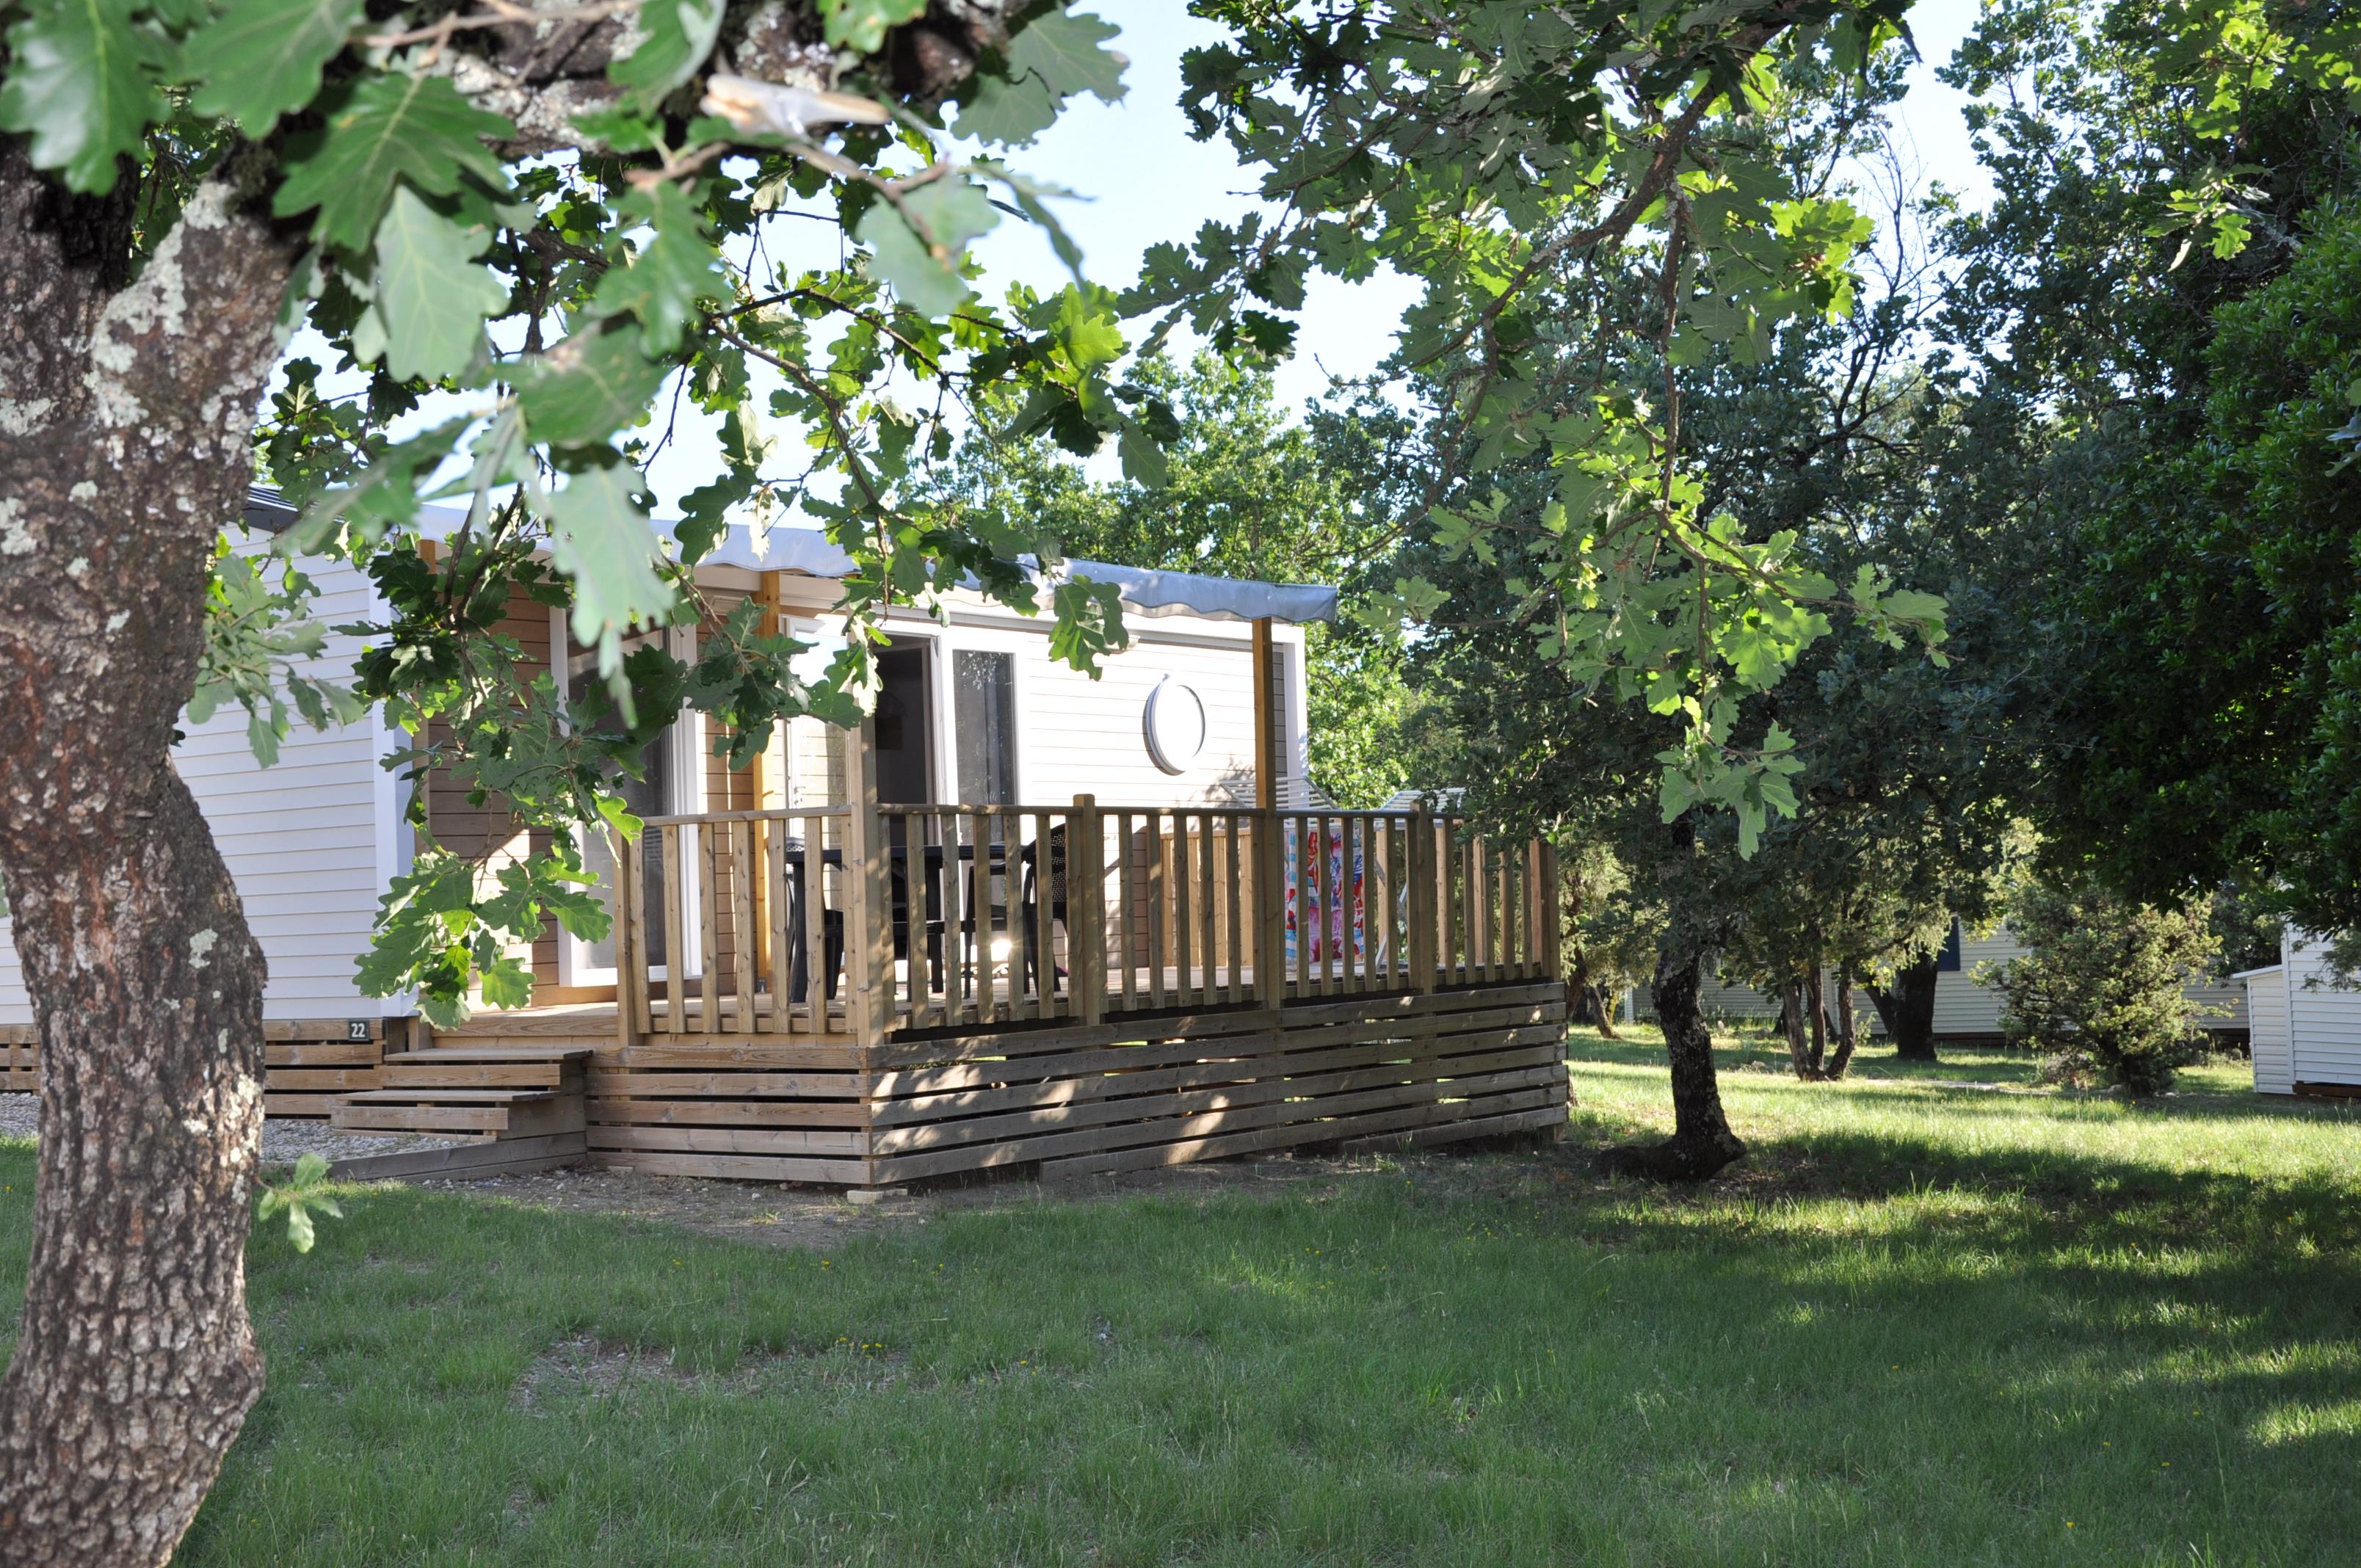 Location - Cottage Premium Climatisation S (30M² + 18 M² De Terasse Avec Pergola, 2 Chambres) - Camping L'Ombrage